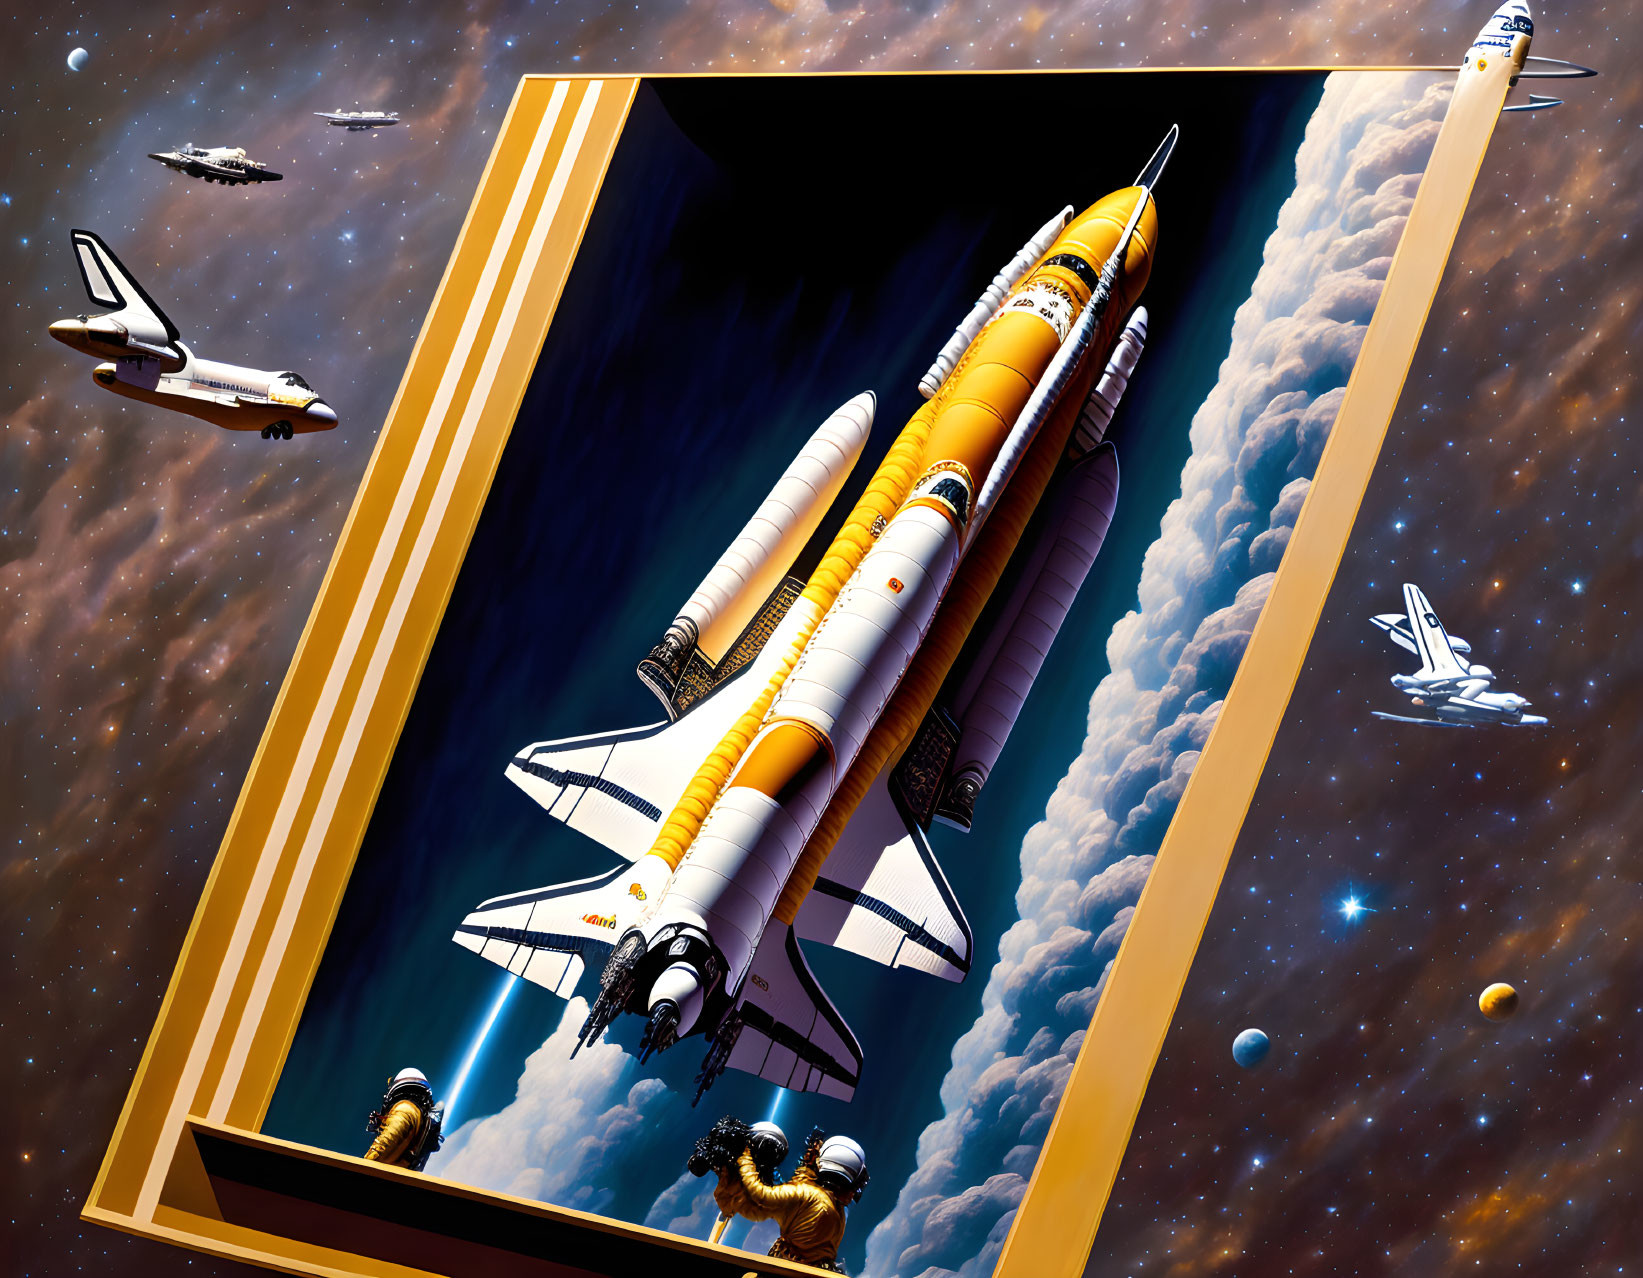 Surreal artwork of space shuttle launch in cosmic scene